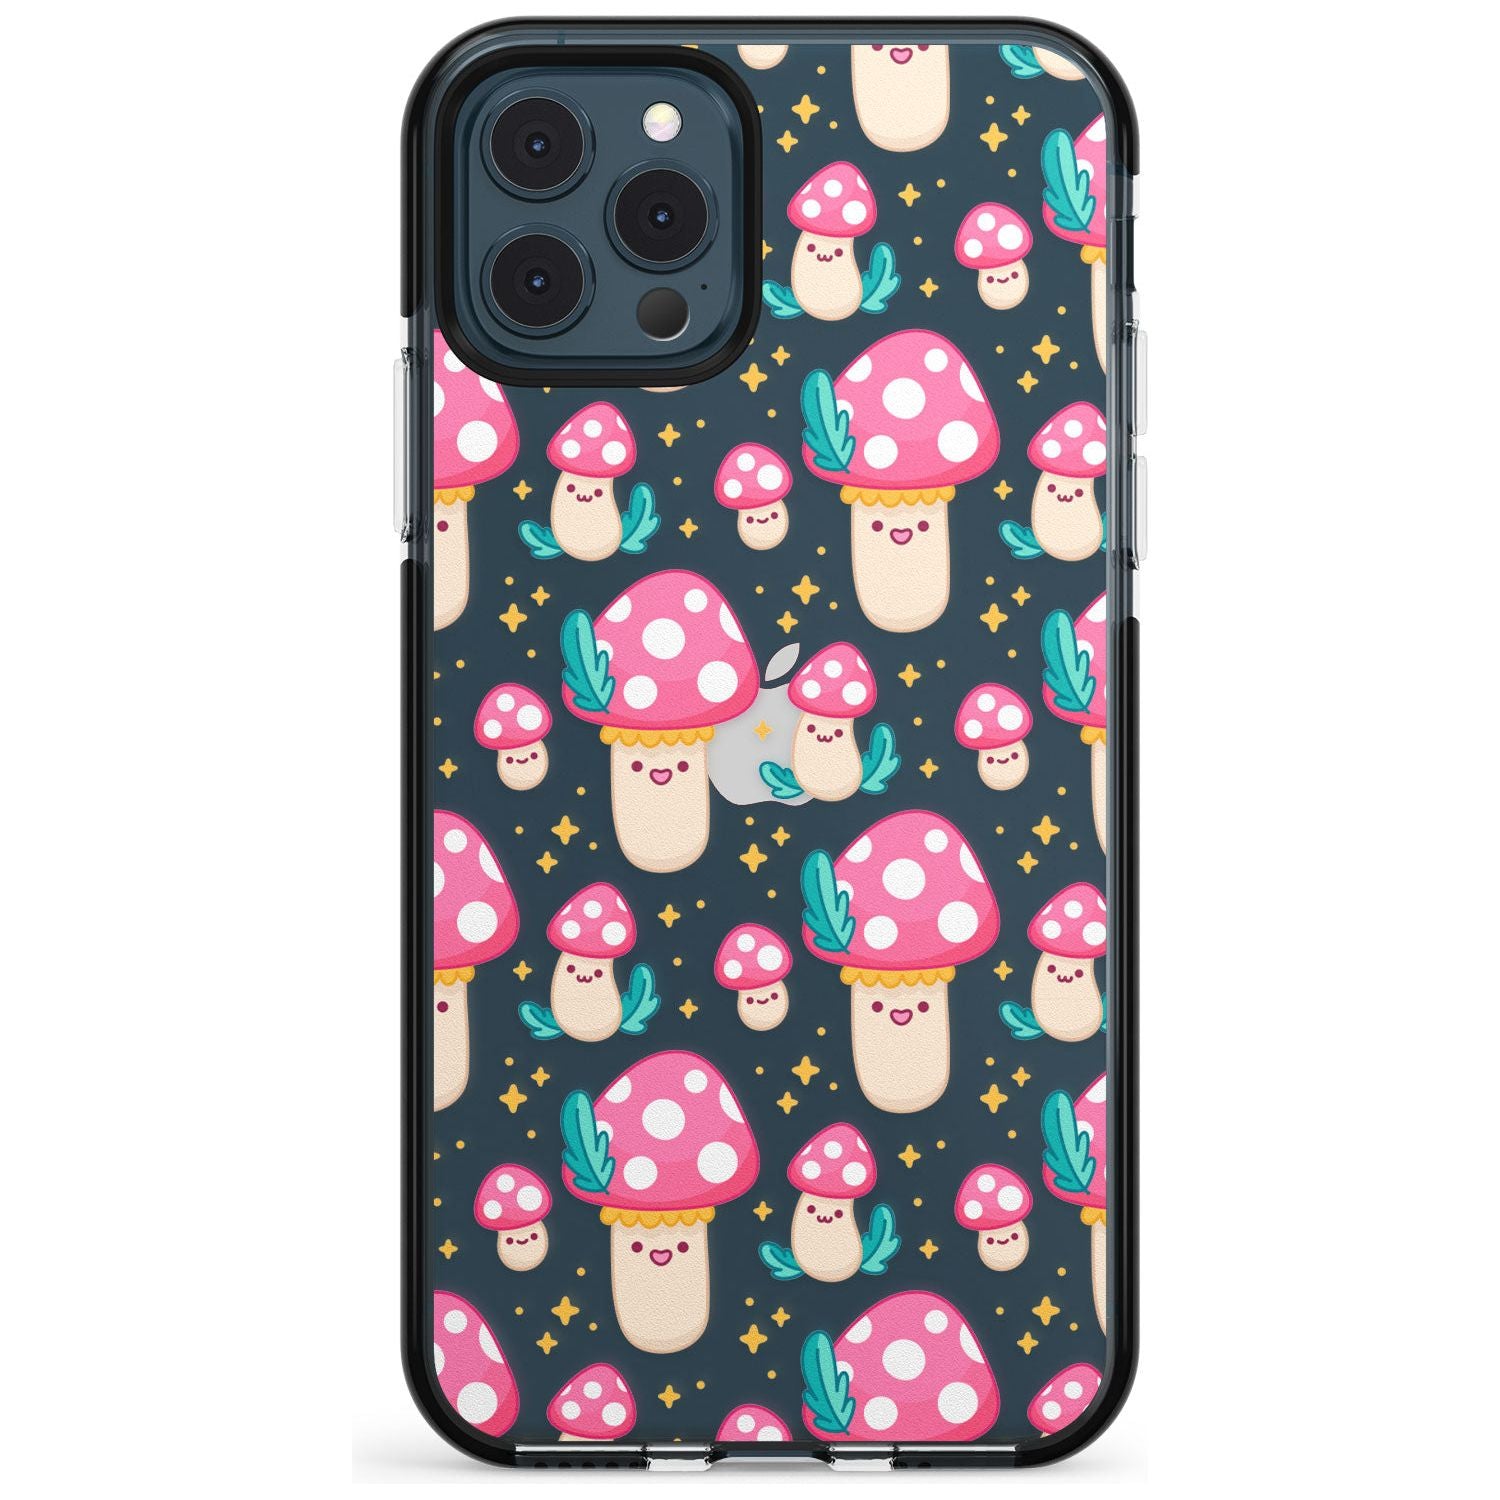 Cute Mushrooms Pattern Black Impact Phone Case for iPhone 11